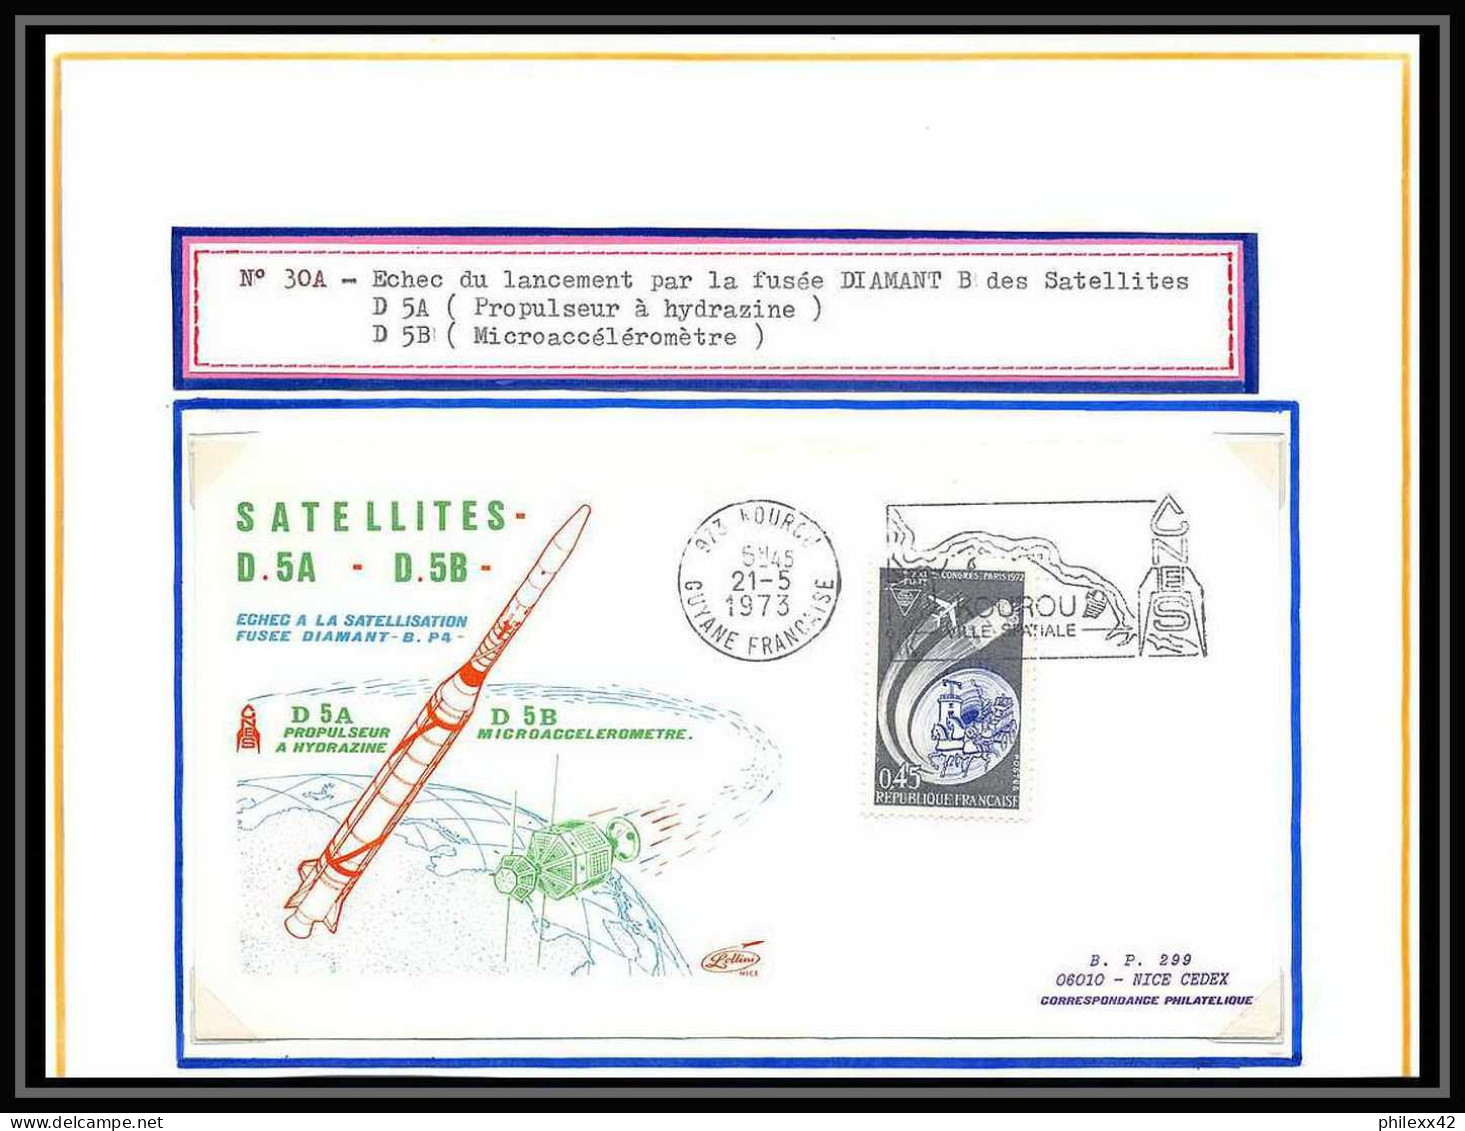 12013 Lollini 30a Echec Diamant B 1973 France Espace (space Raumfahrt) Lettre (cover Briefe) - Europe